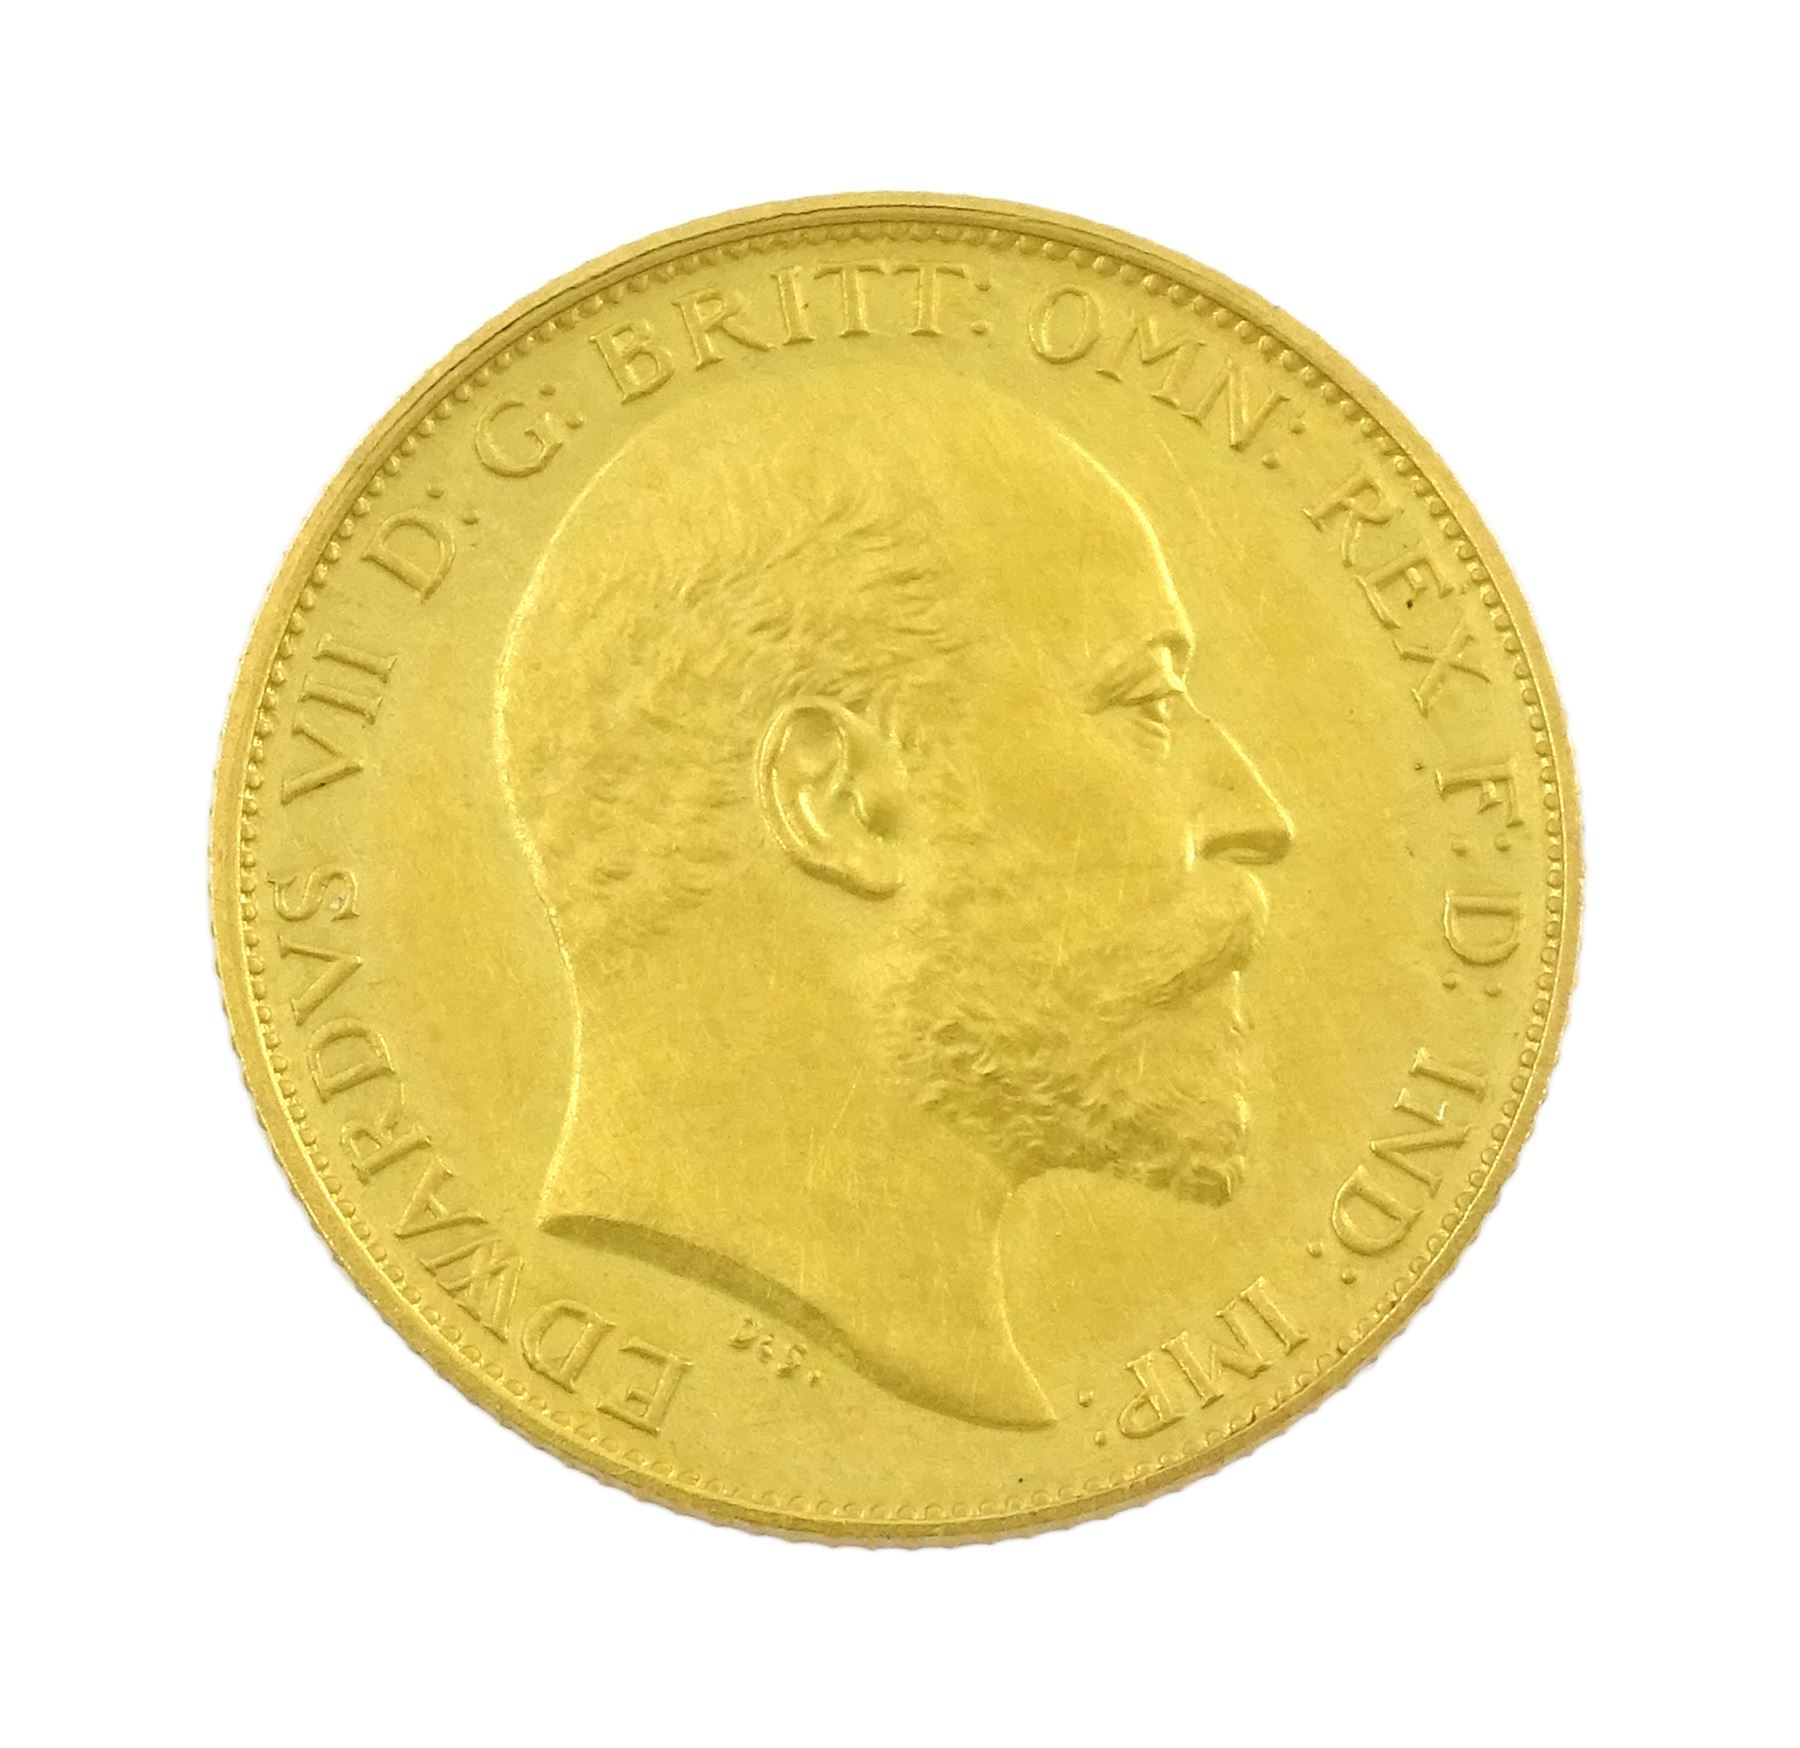 King Edward VII 1902 matt proof short coin set - Image 6 of 26